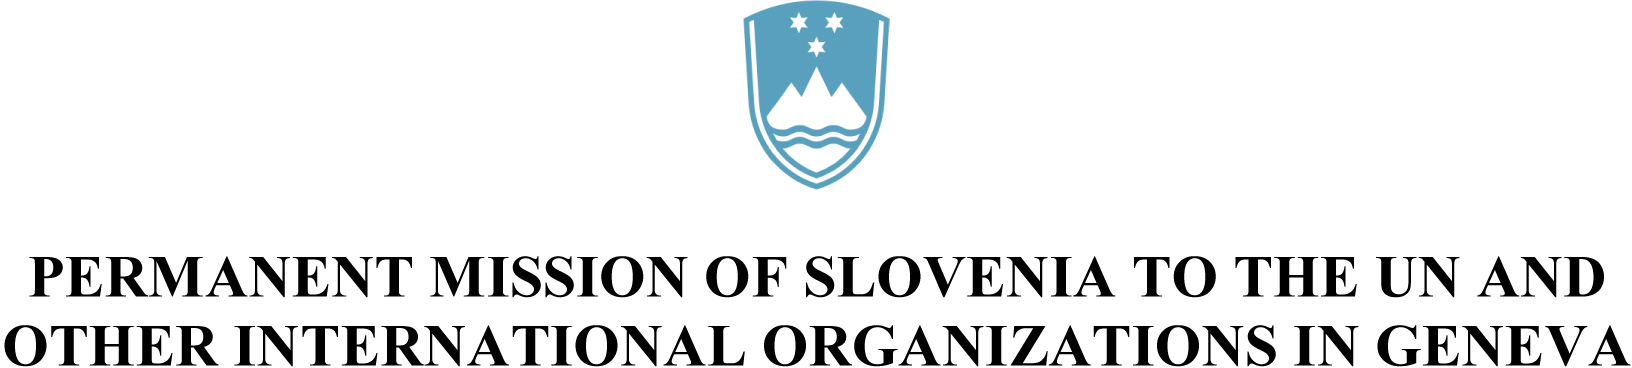 logo4_missionslovenia.jpg